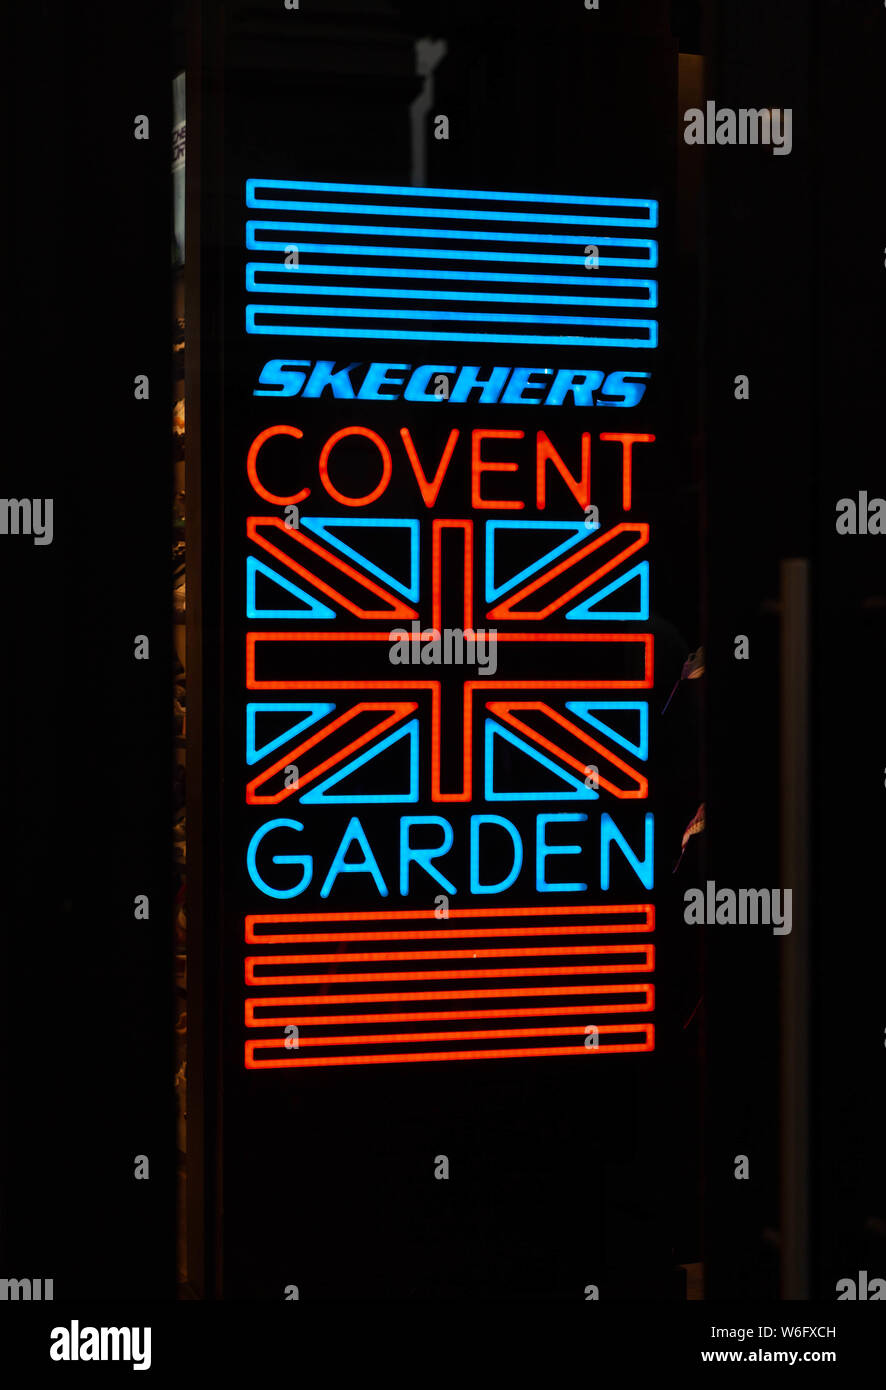 Skechers Covent Garden LED sign Stock Photo - Alamy